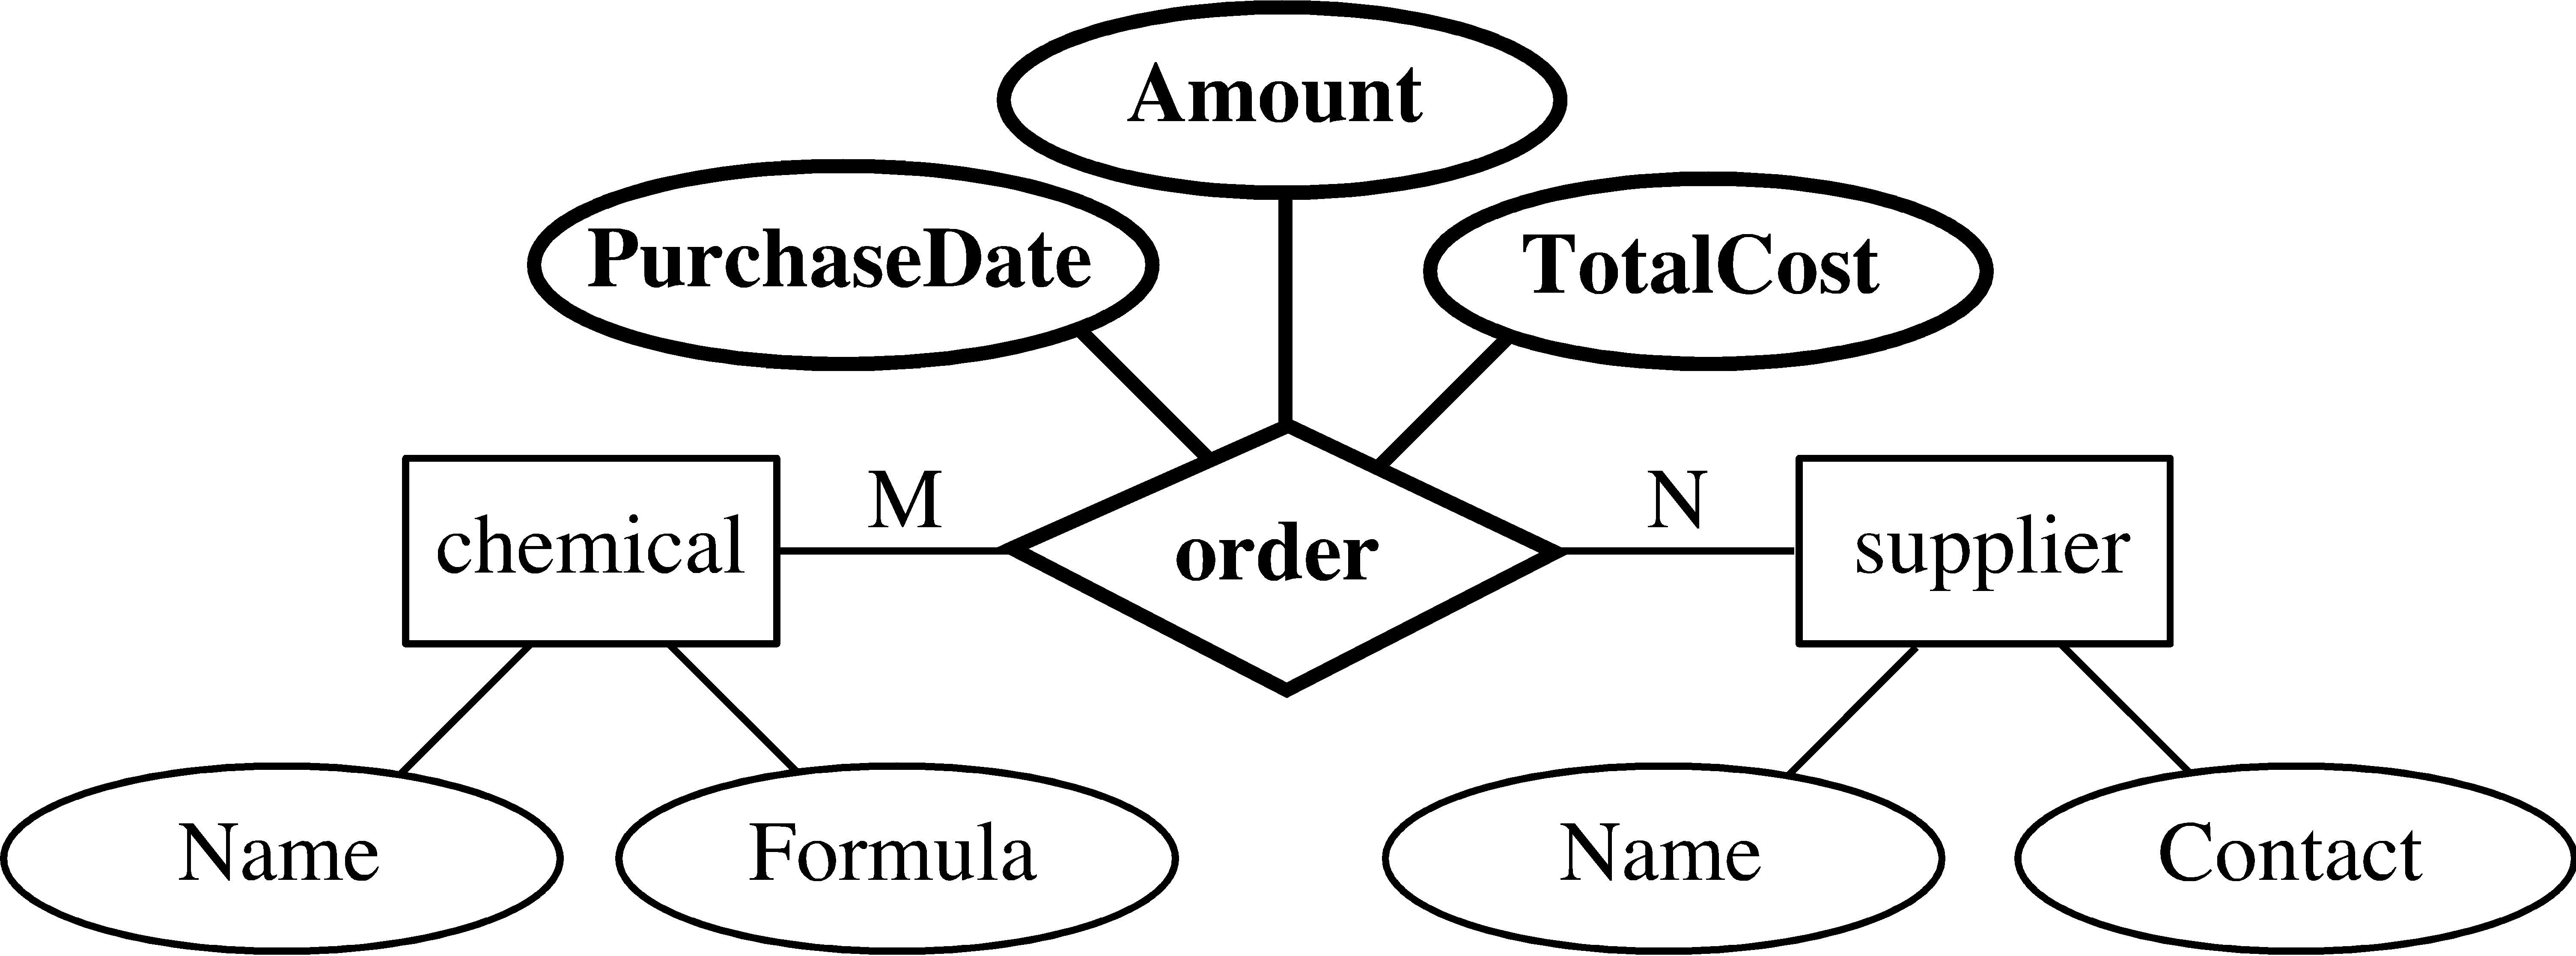 Entity-Relationship Model in Er Diagram Multivalued Attribute